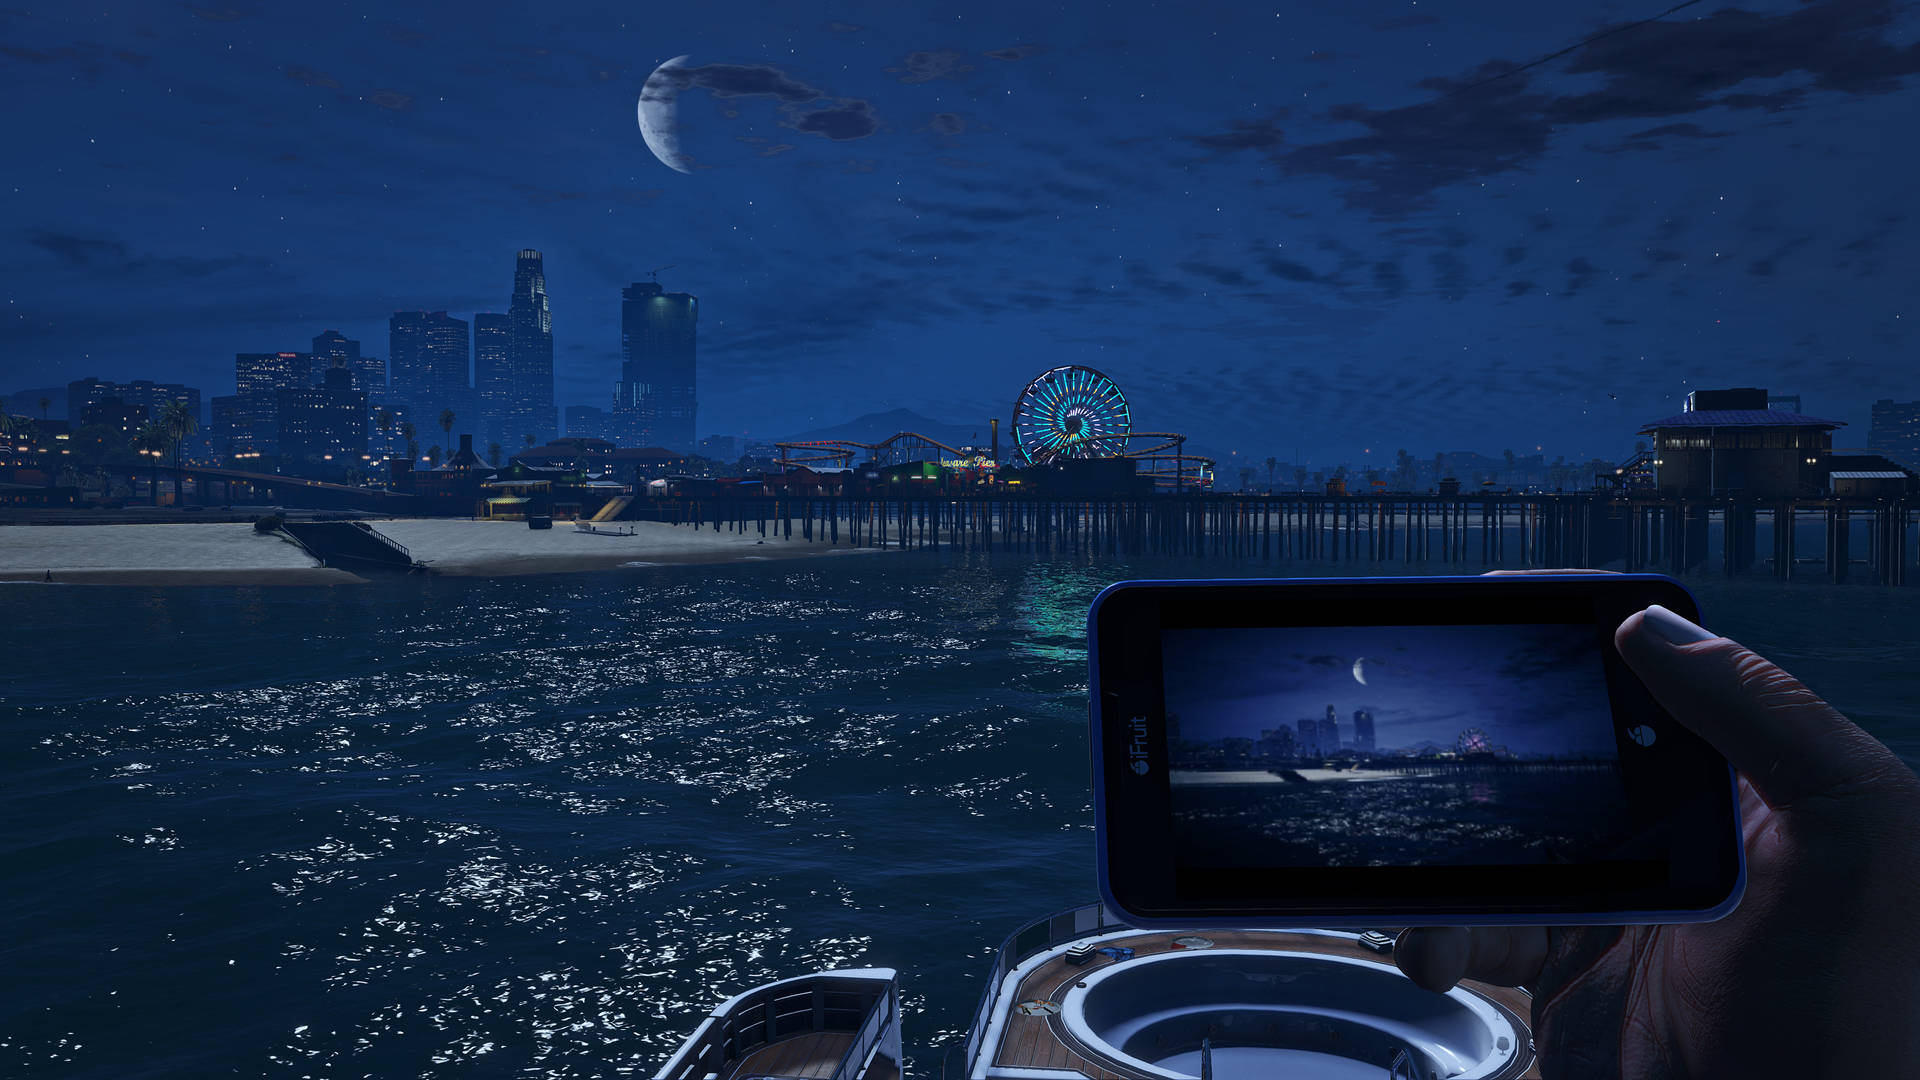 Grand Theft Auto V Del Perro Pier Papel de Parede